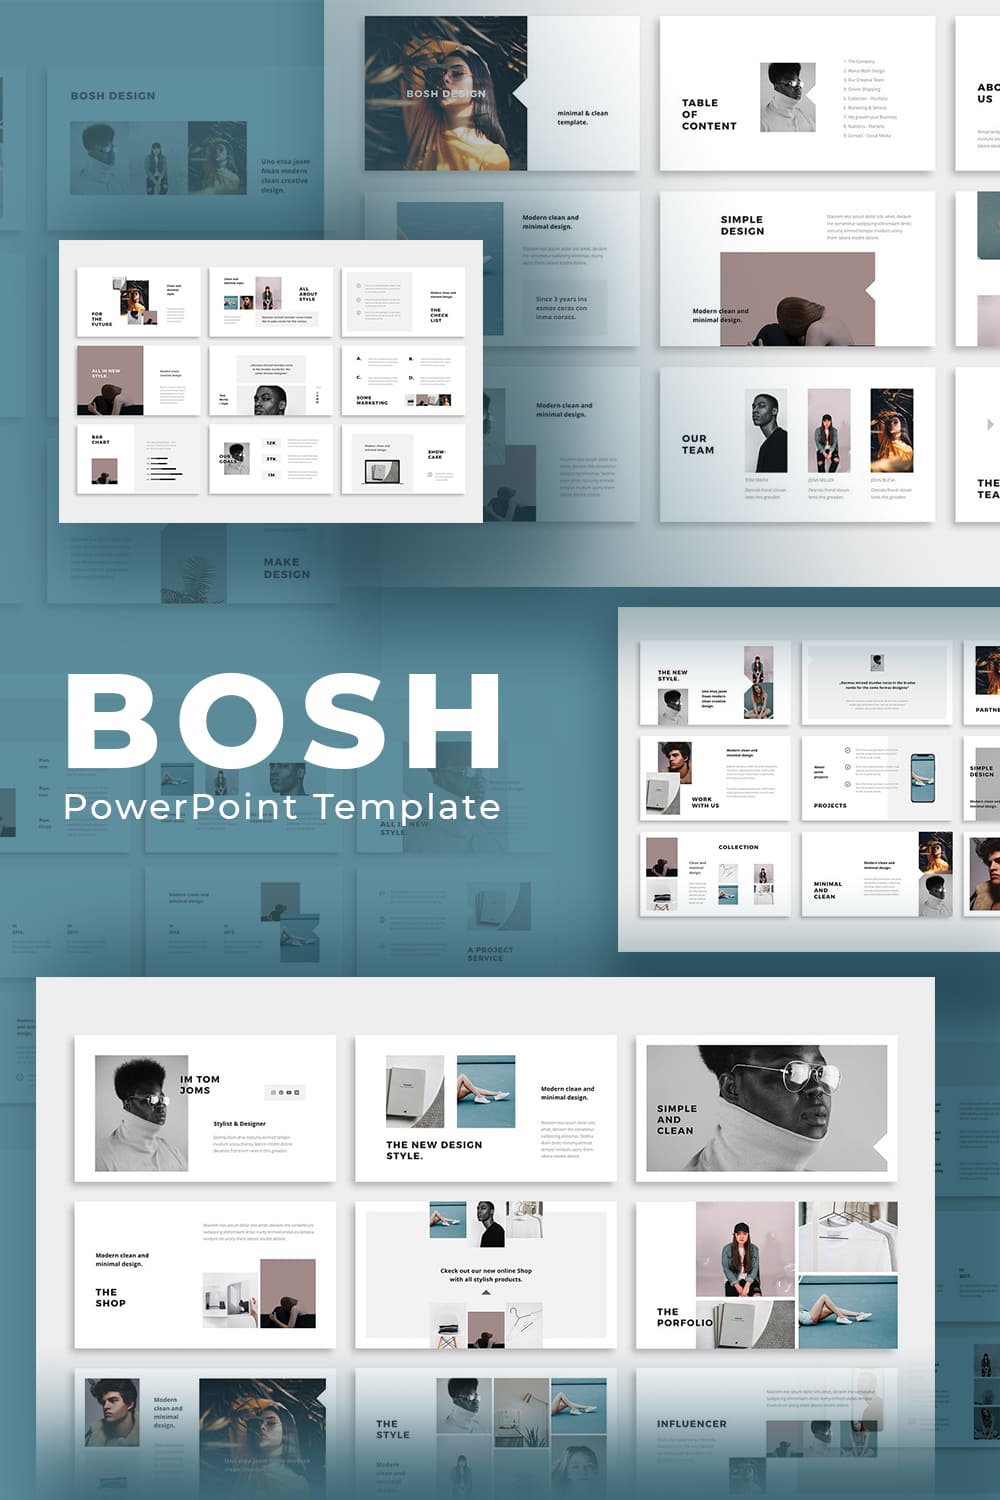 BOSH - Powerpoint Template by MasterBundles Pinterest Collage Image.